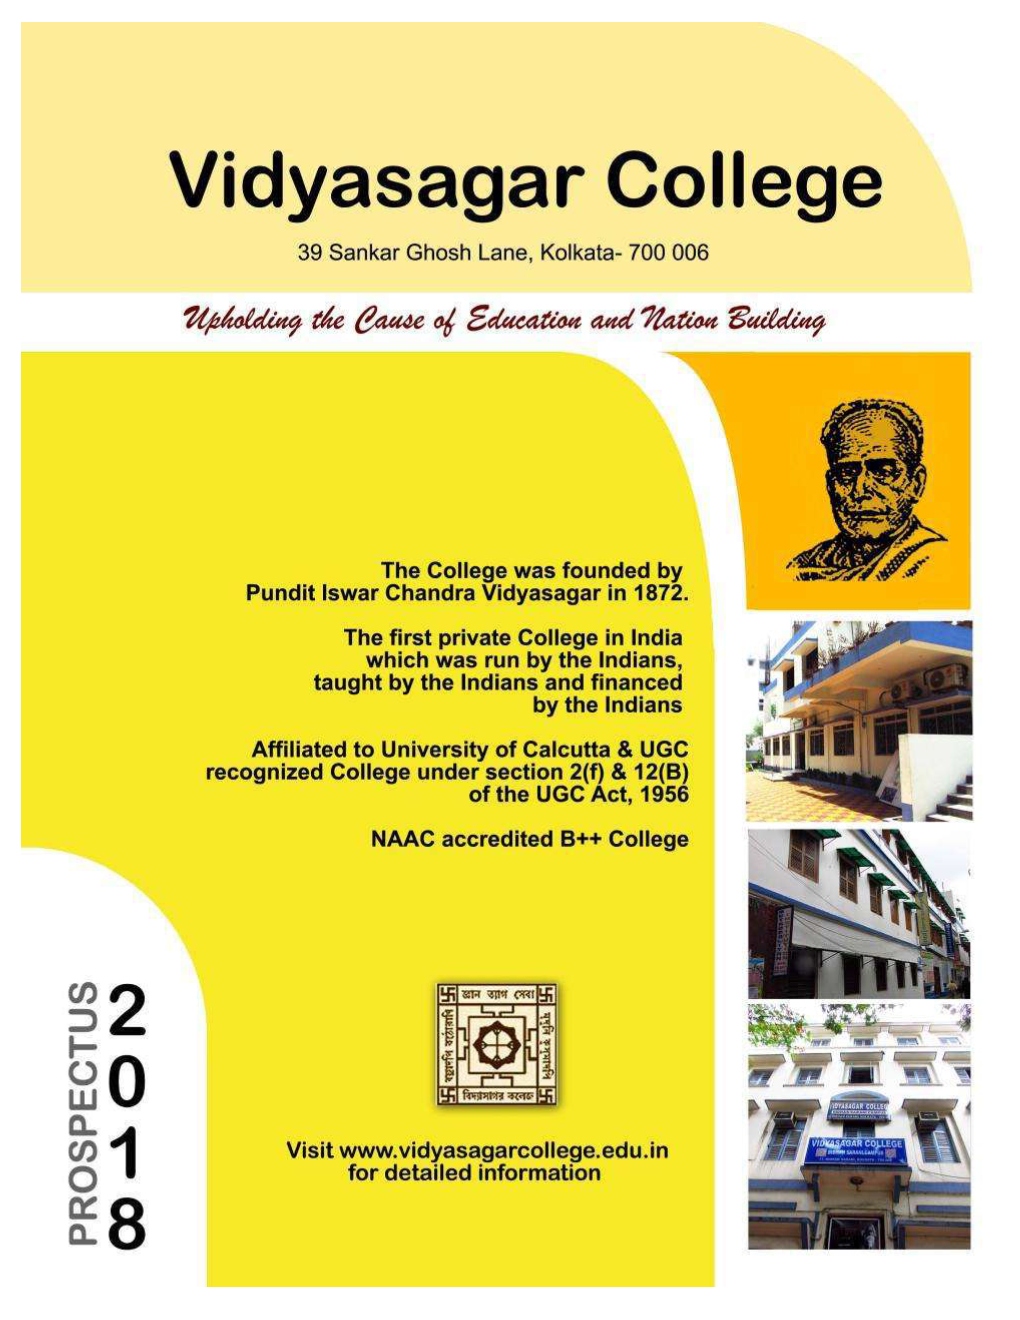 Address, Communication & Location Why to Choose Vidyasagar College?